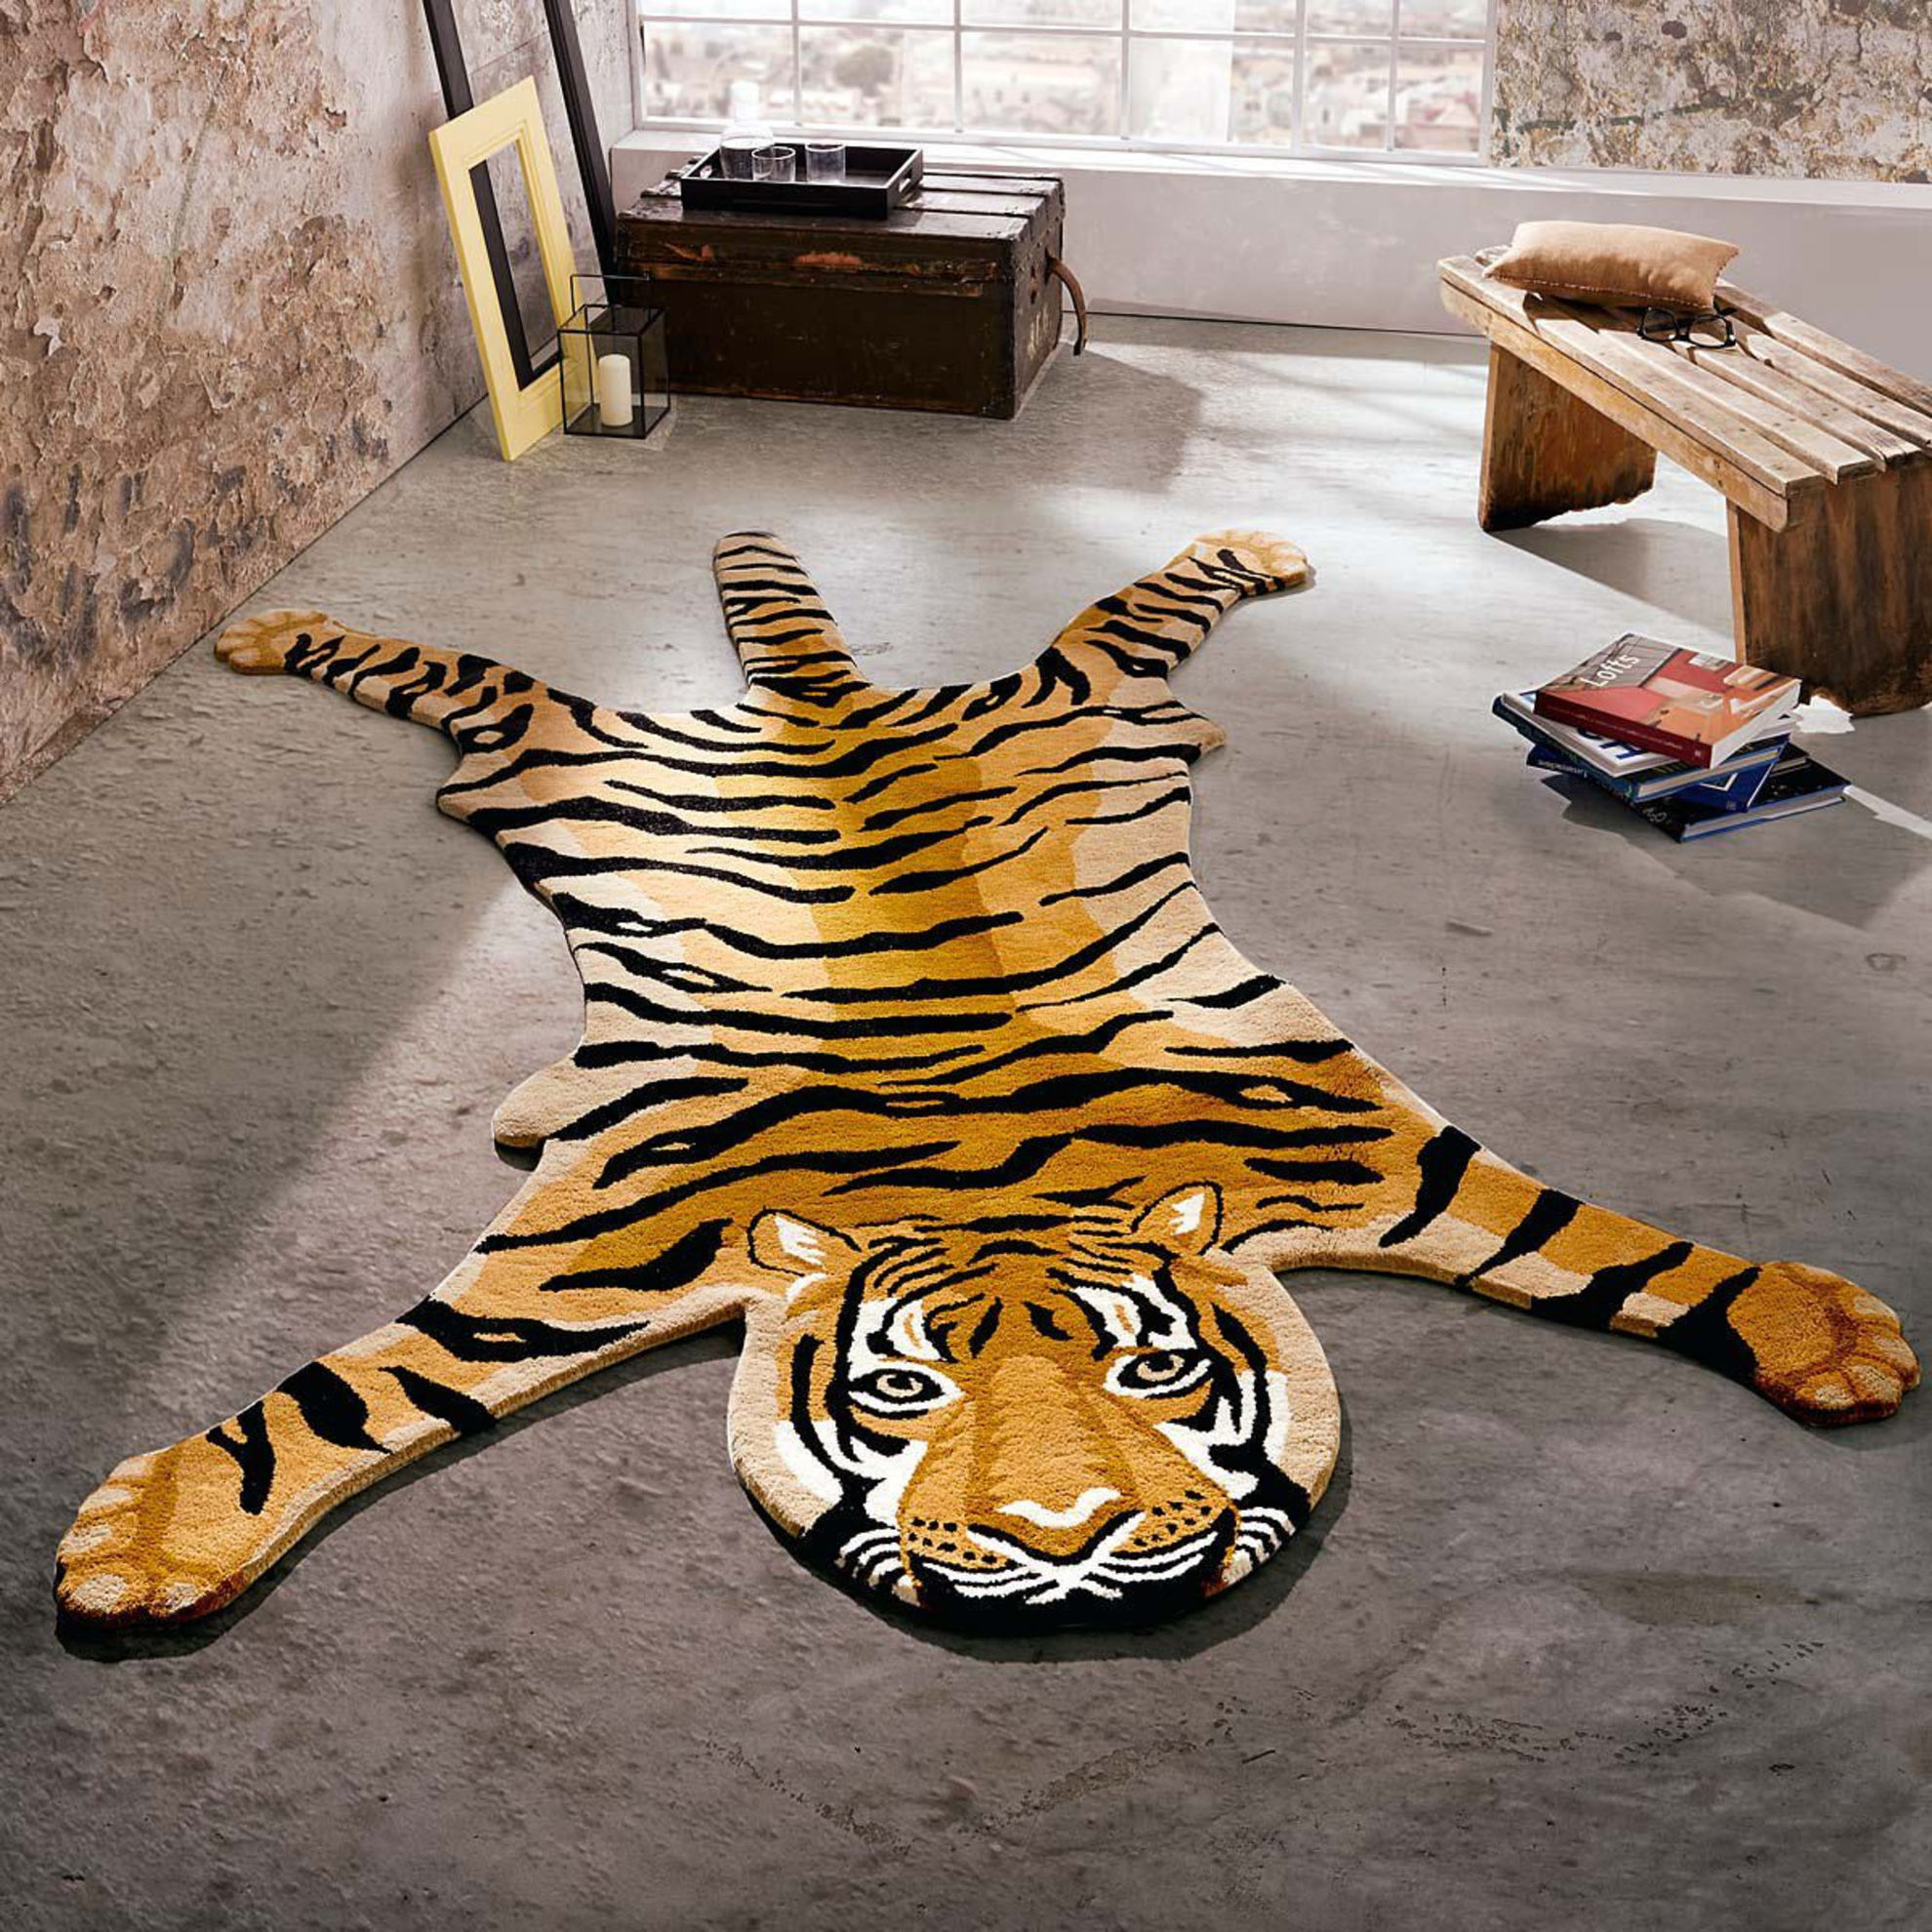 Teppich Tiger 170x240 jetzt bei Weltbild.de bestellen